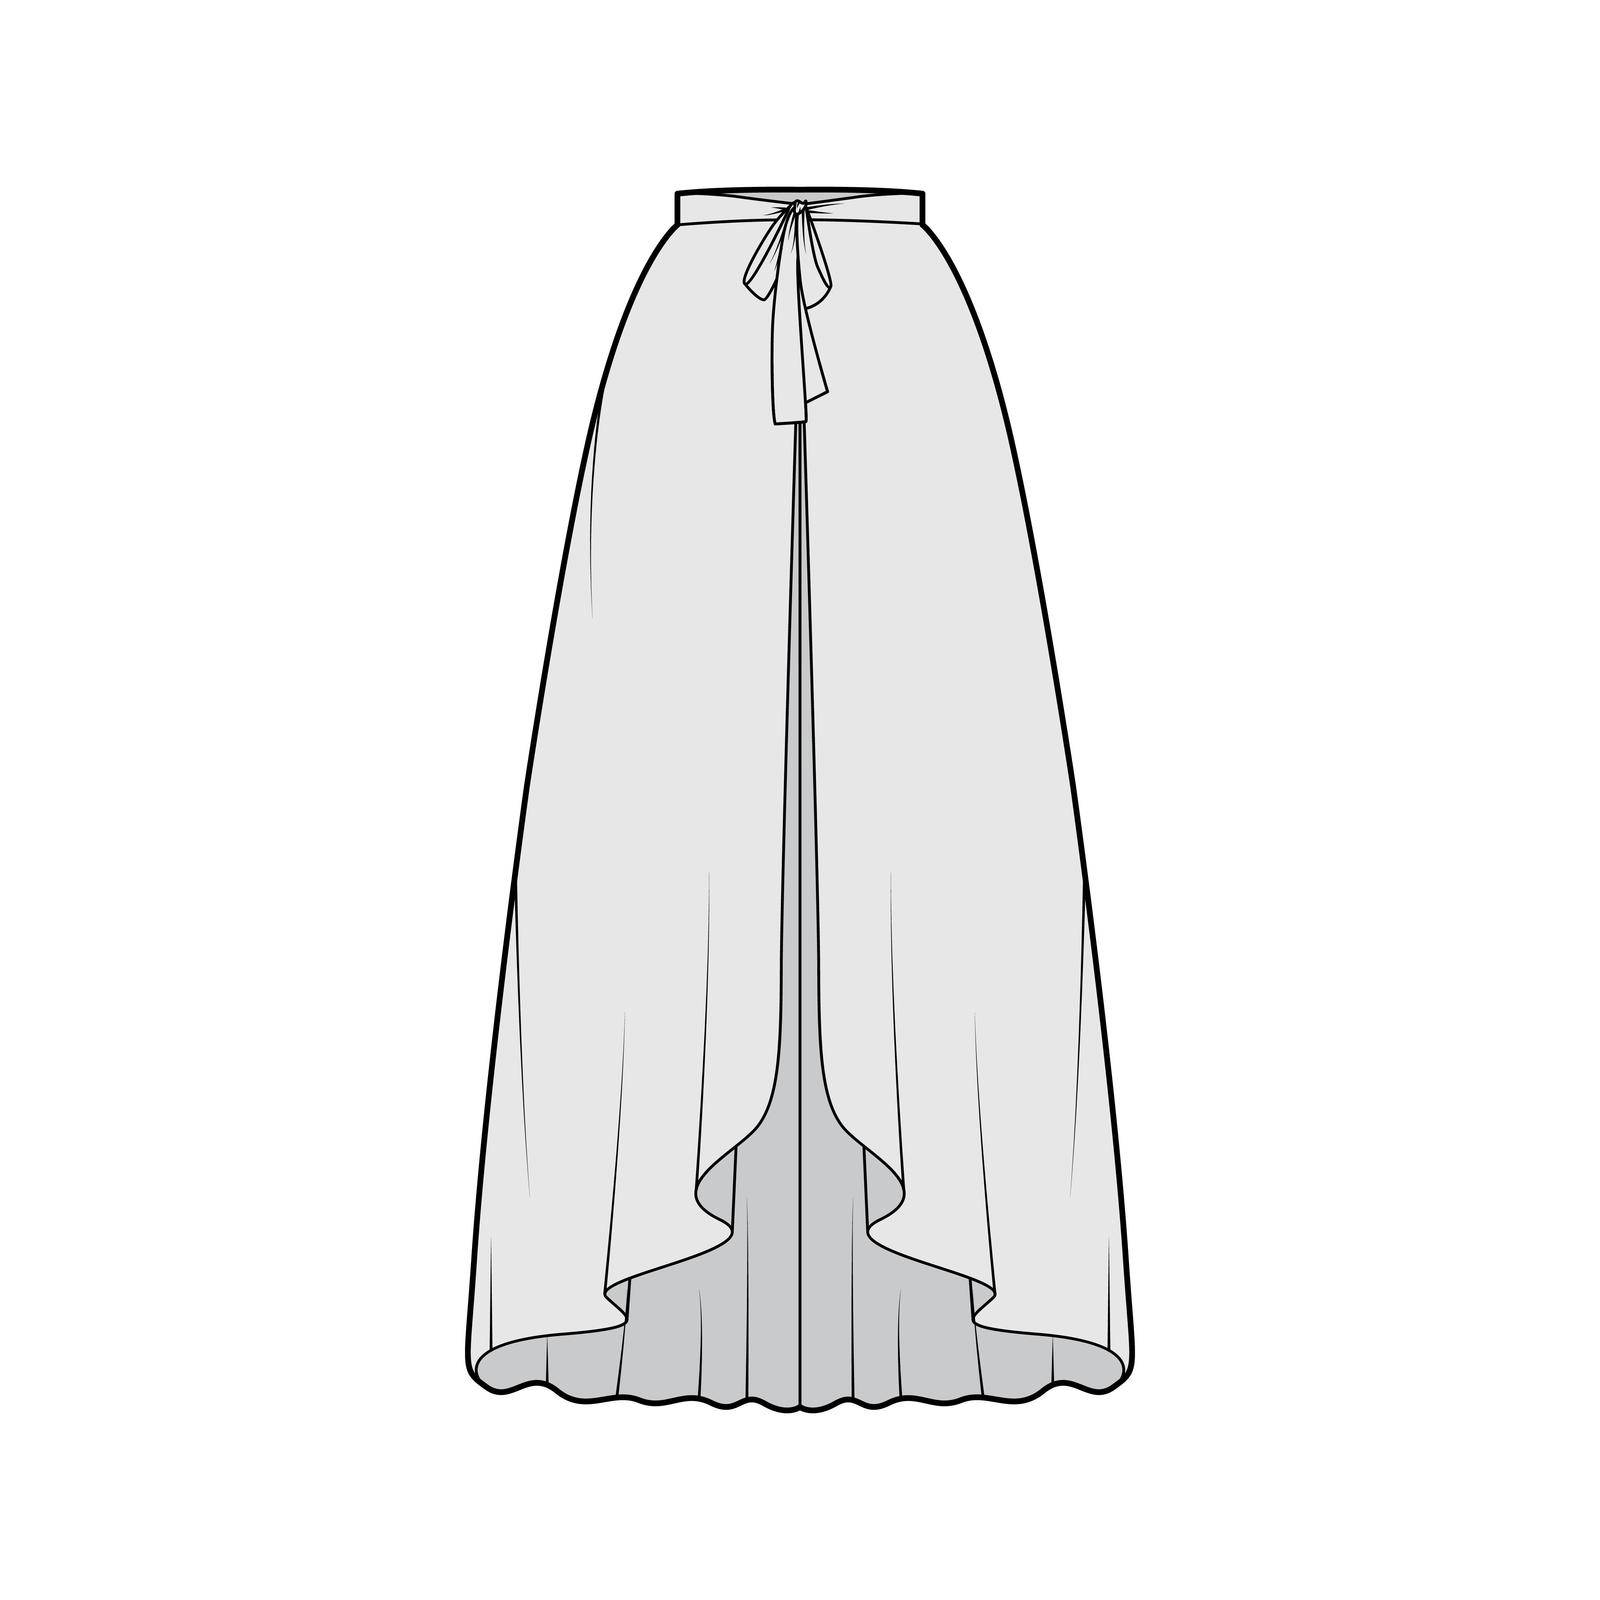 Over Skirt circular fullness technical fashion illustration with bow, floor ankle lengths, thin waistband. Flat bottom by Vectoressa